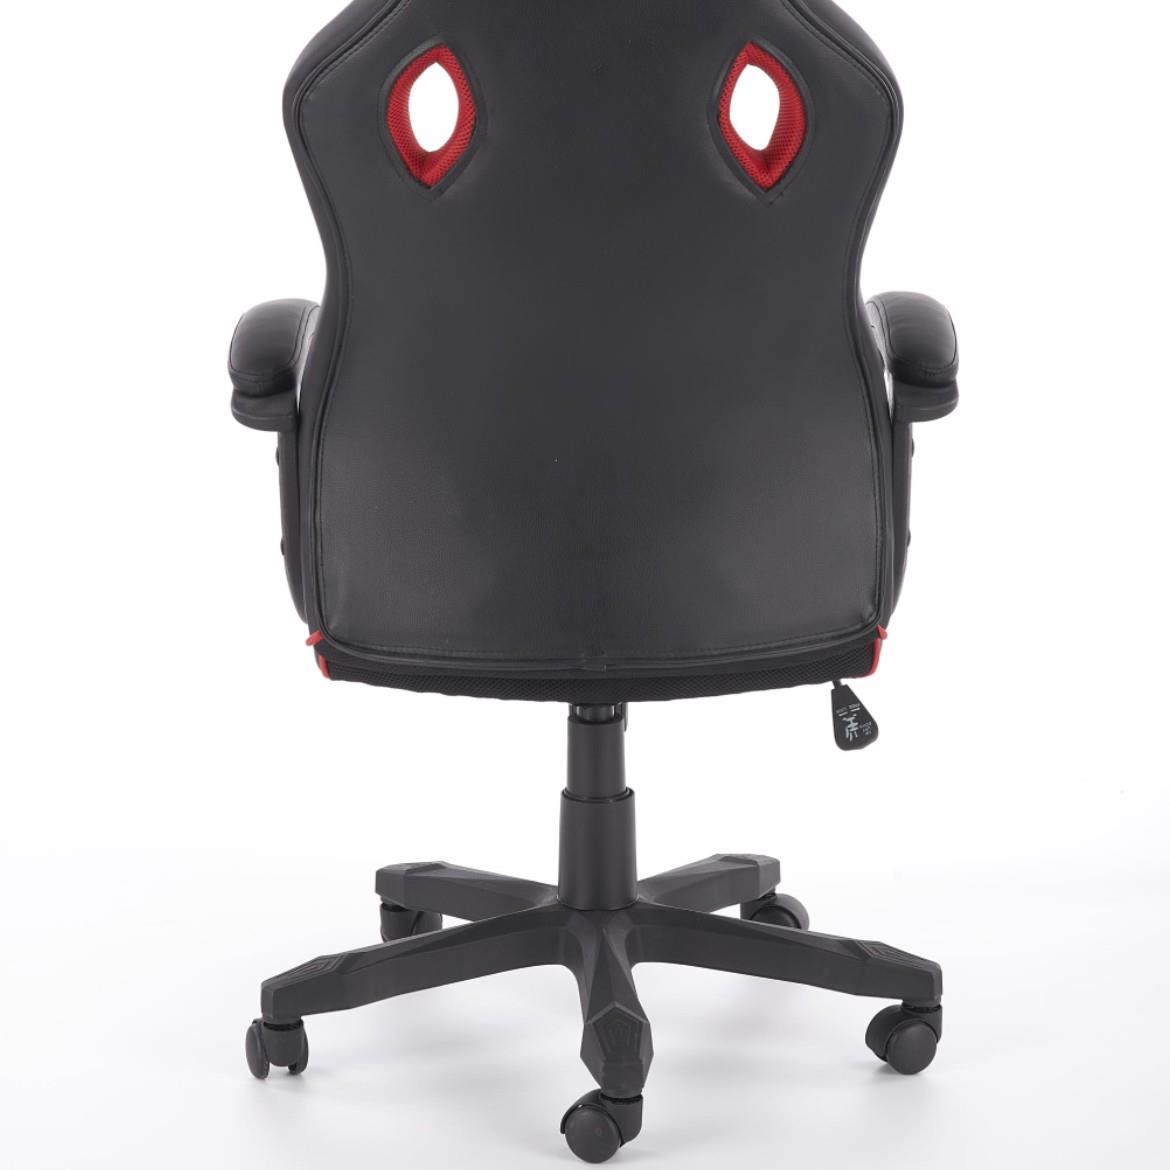 Baffin kancelarijska fotelja 64x70x118 cm crno/crvena